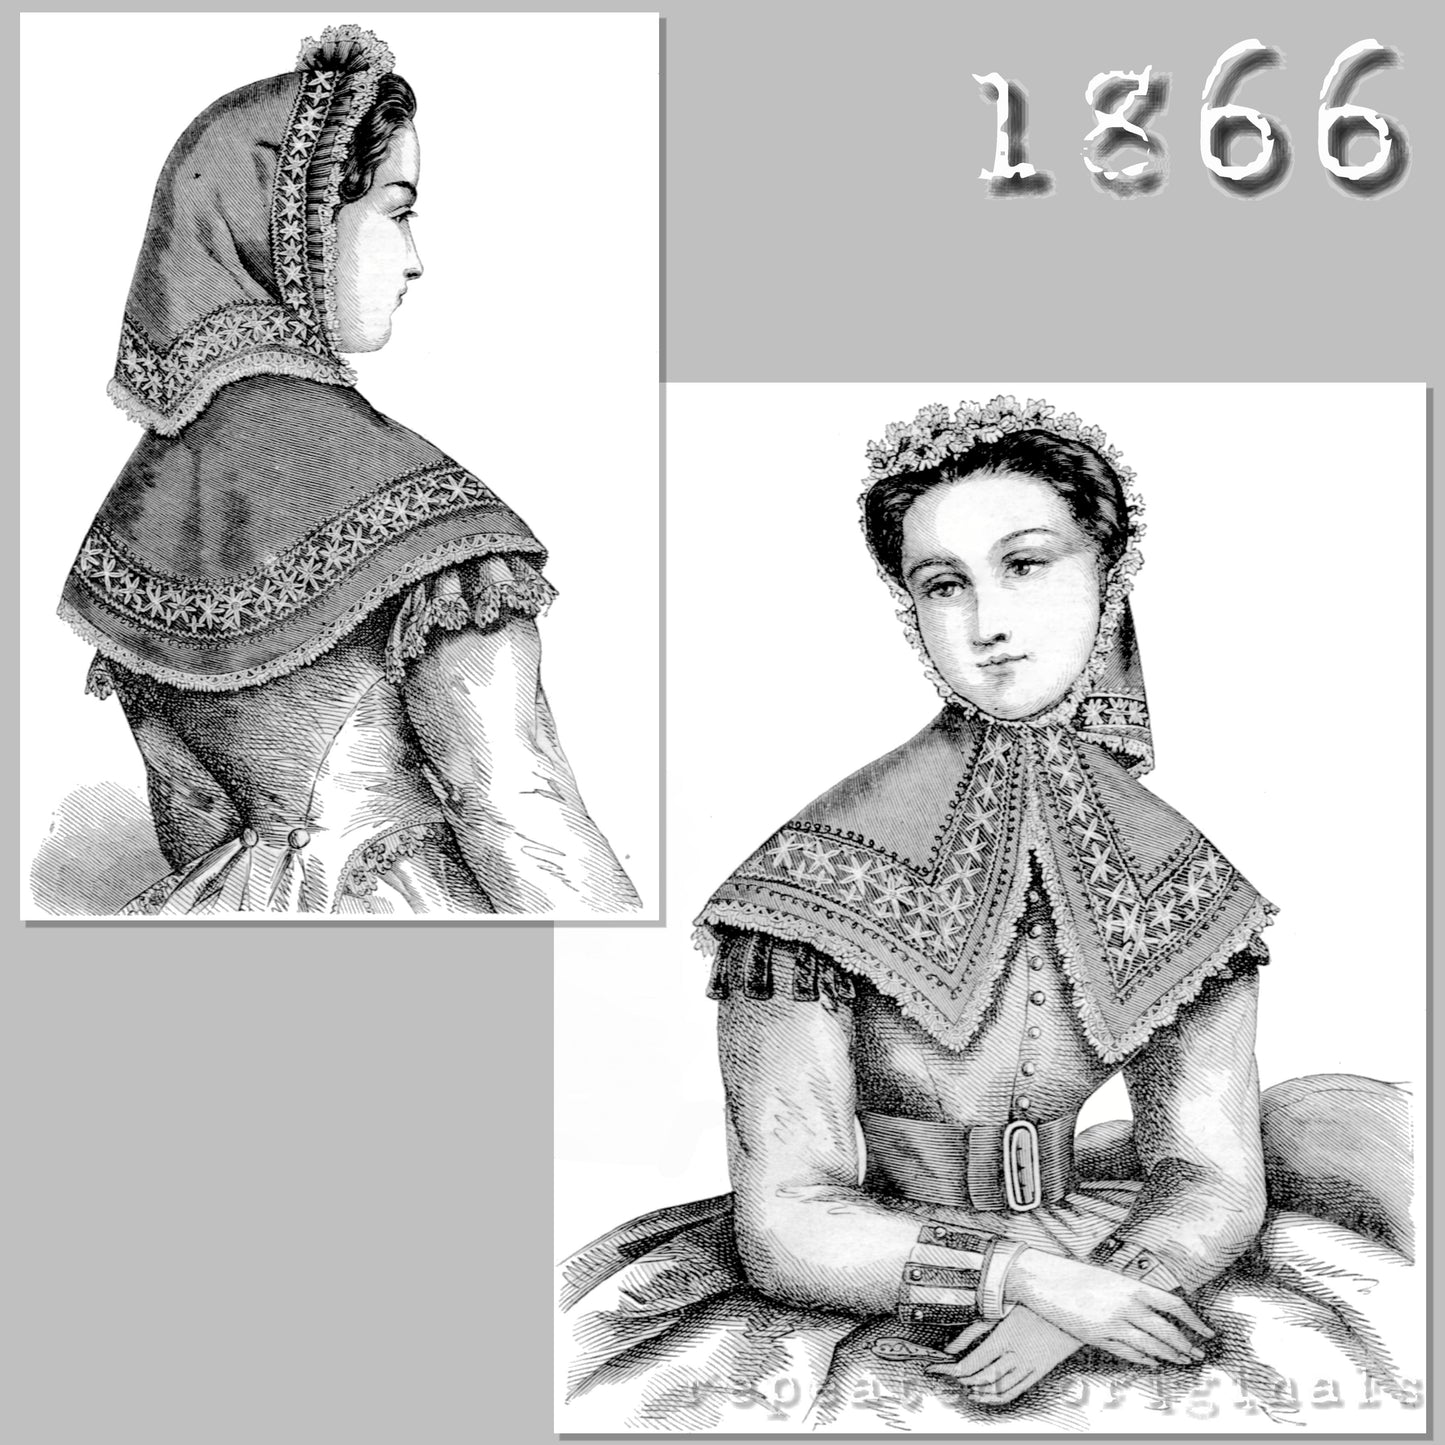 1866 Capuchon-fanchon Sewing Pattern - INSTANT DOWNLOAD PDF